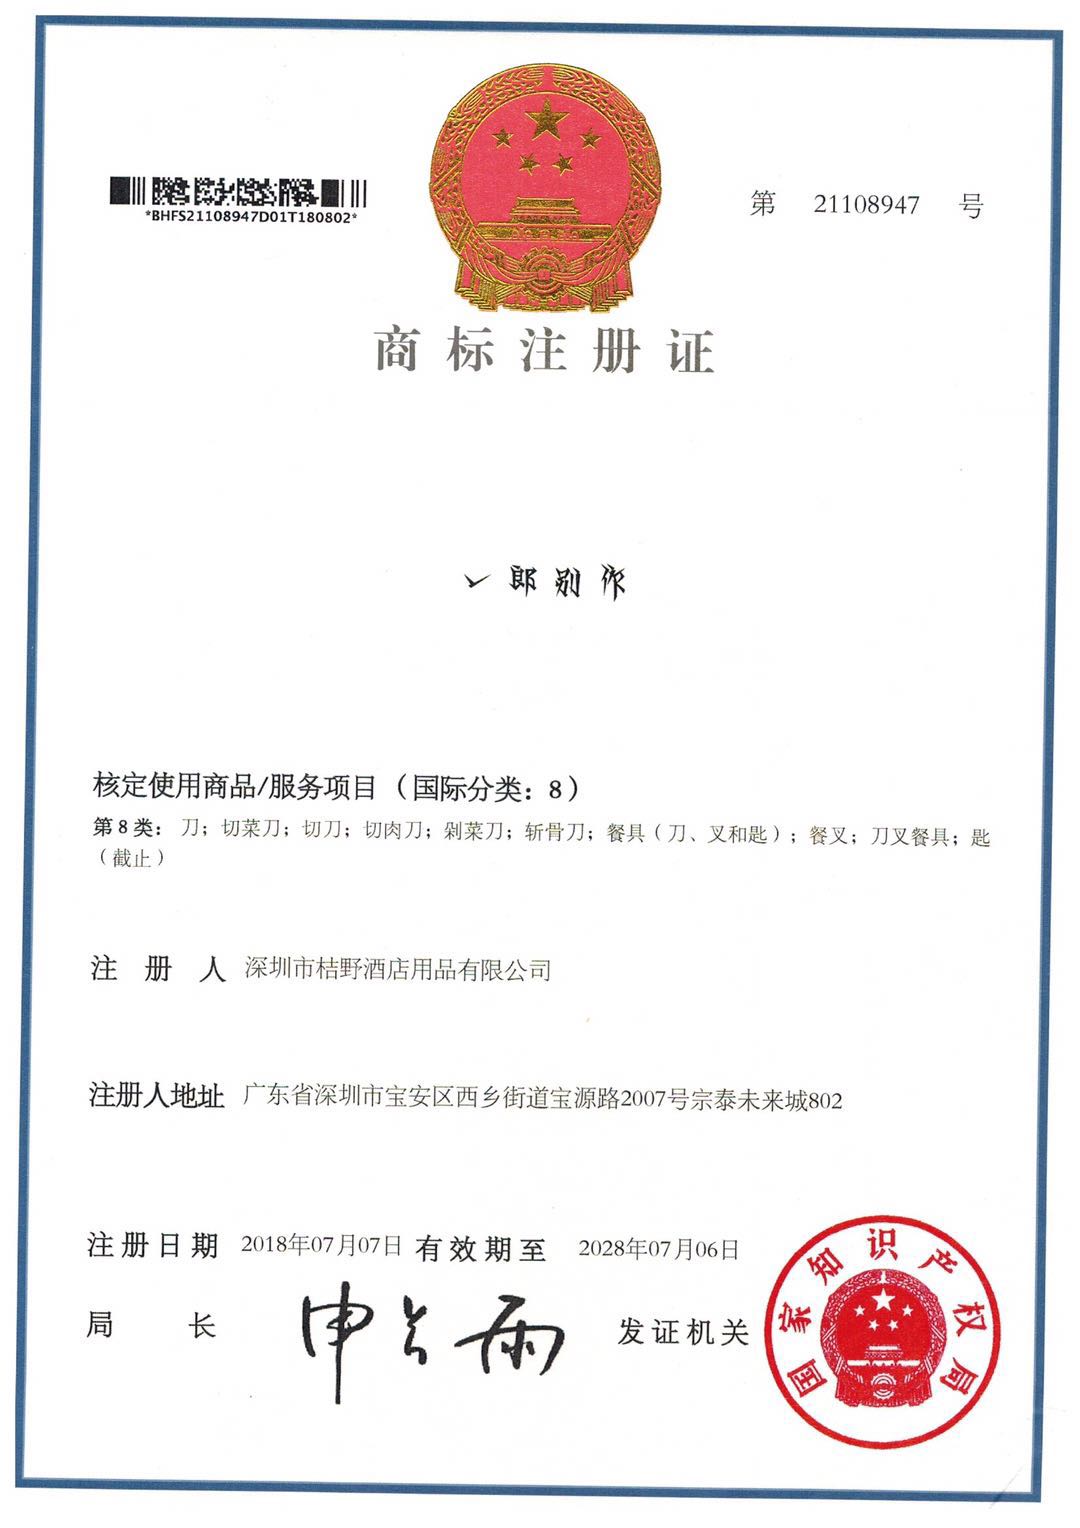 Yilangbiezuo as a registered trademark